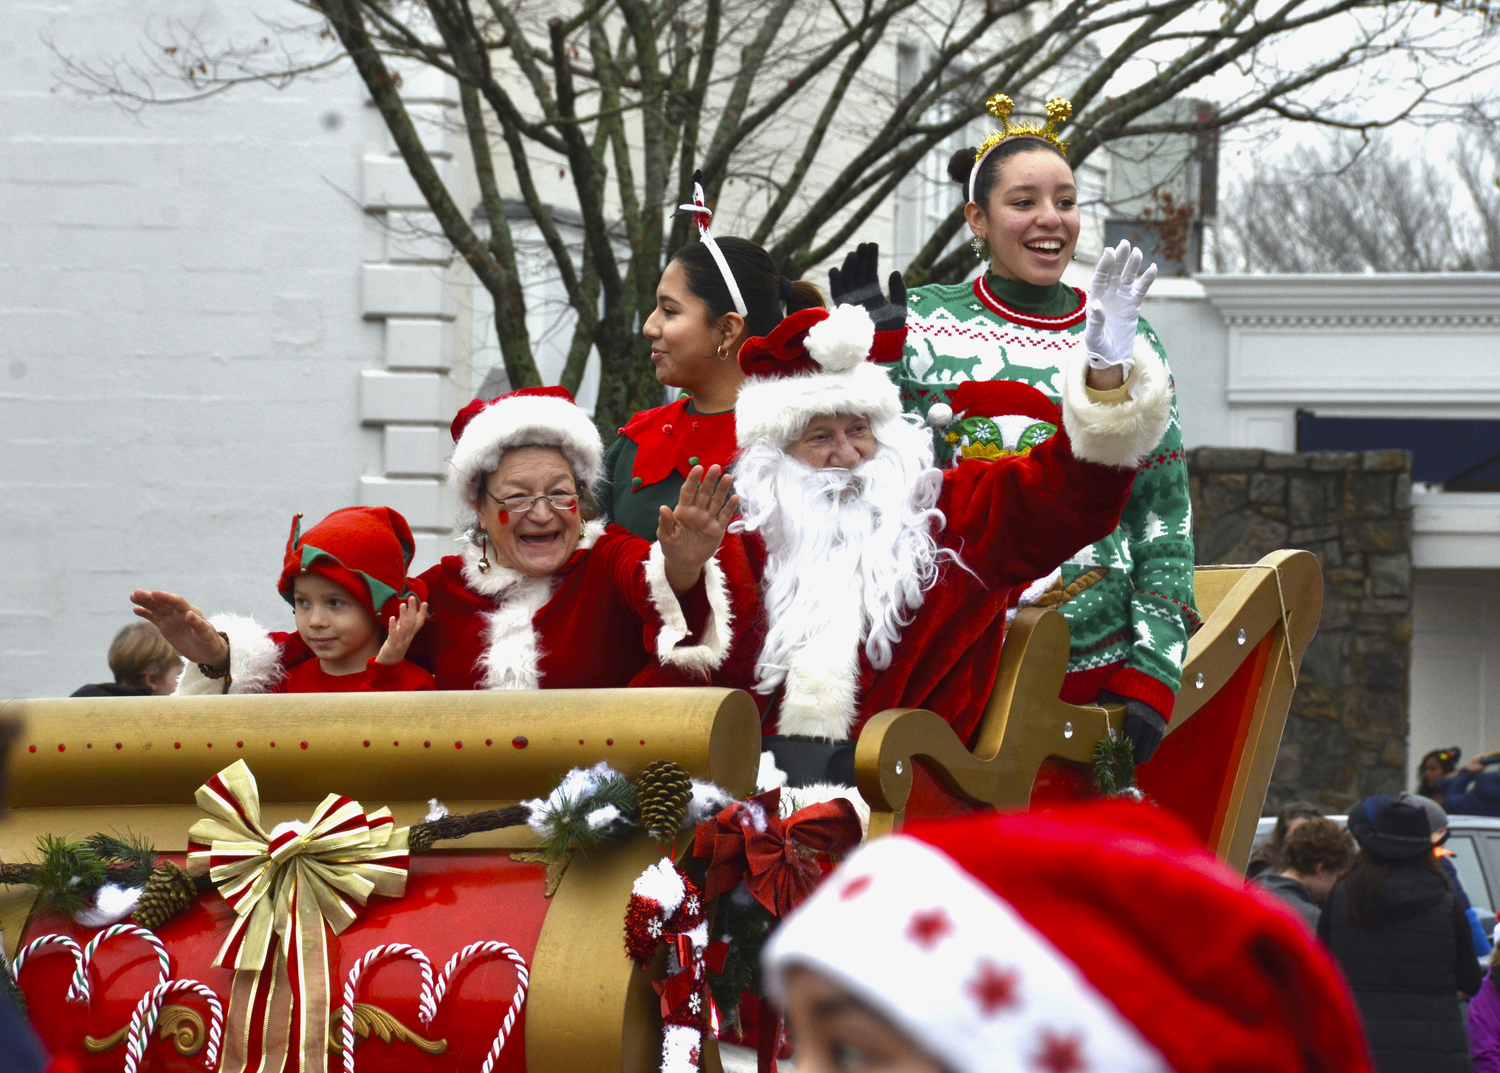 Santa and Mrs. Claus arrive at the Santa Parade in East Hampton on Saturday.